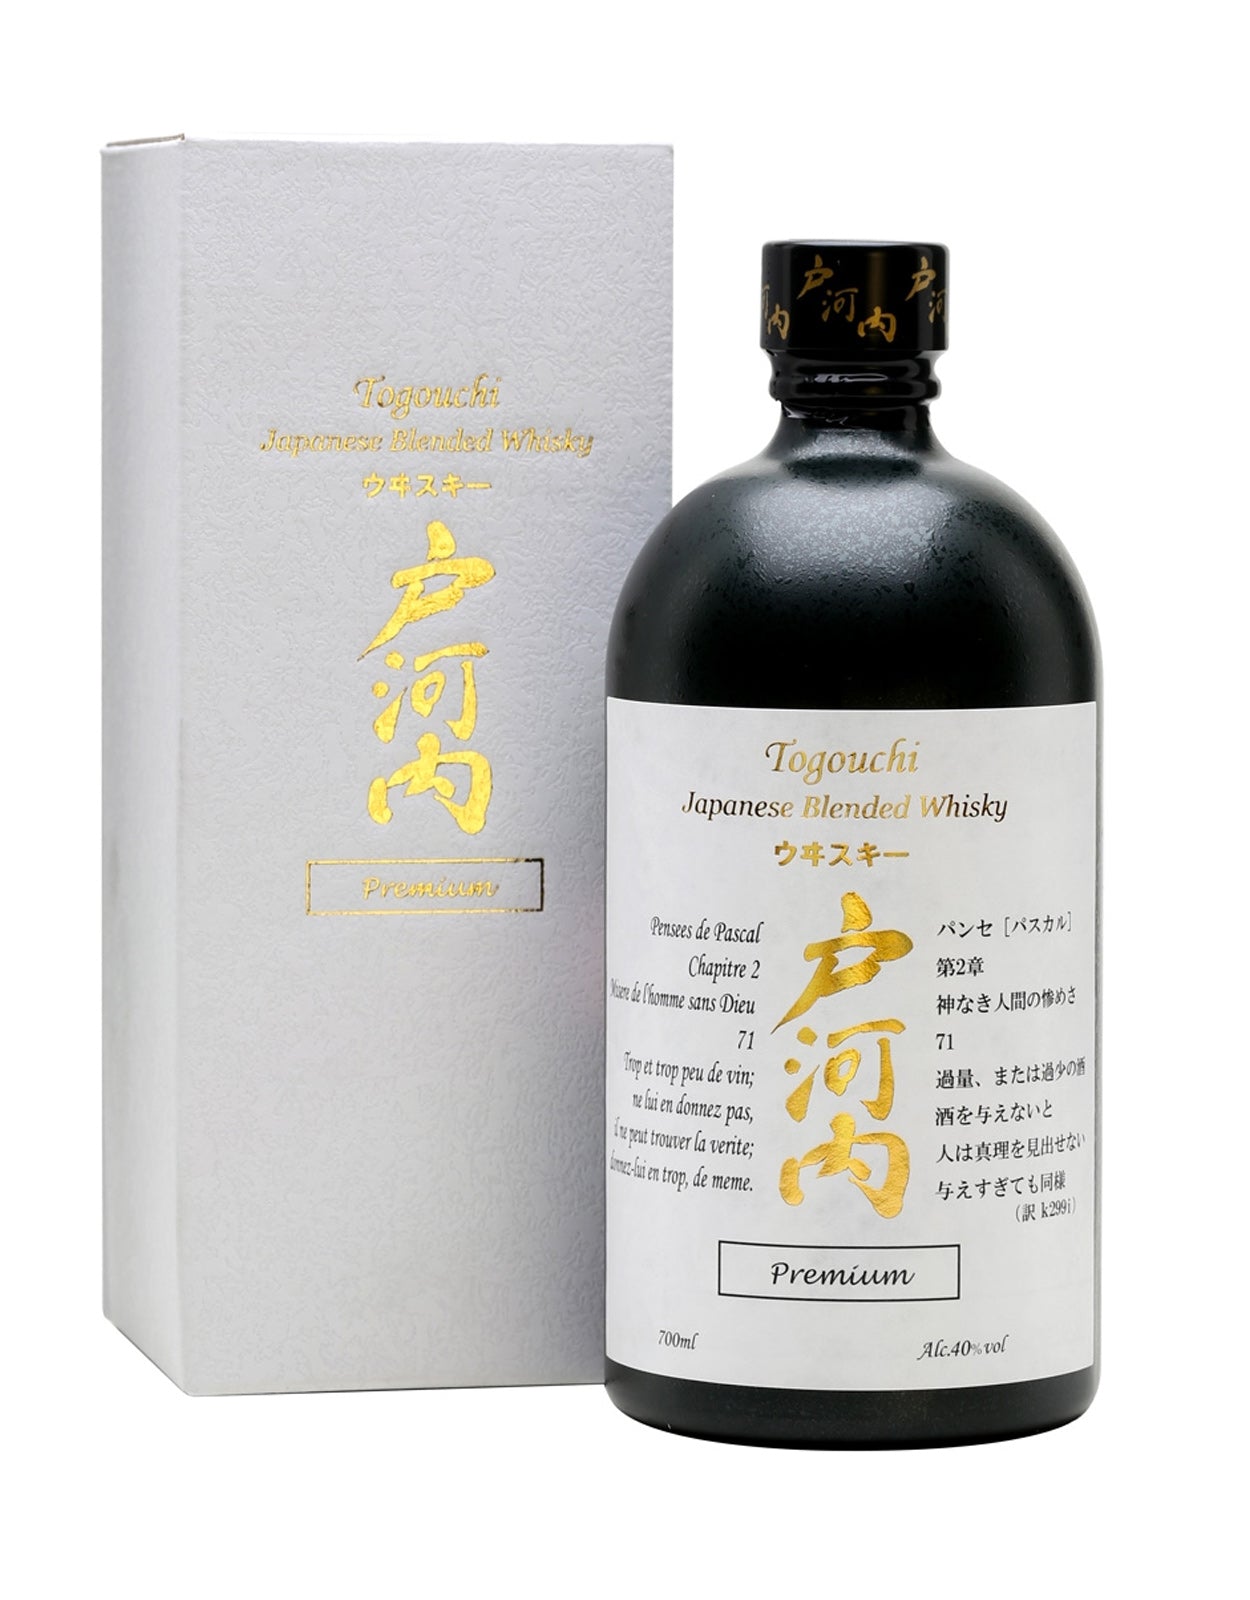 Togouchi Premium Japanese Blended Whiskey